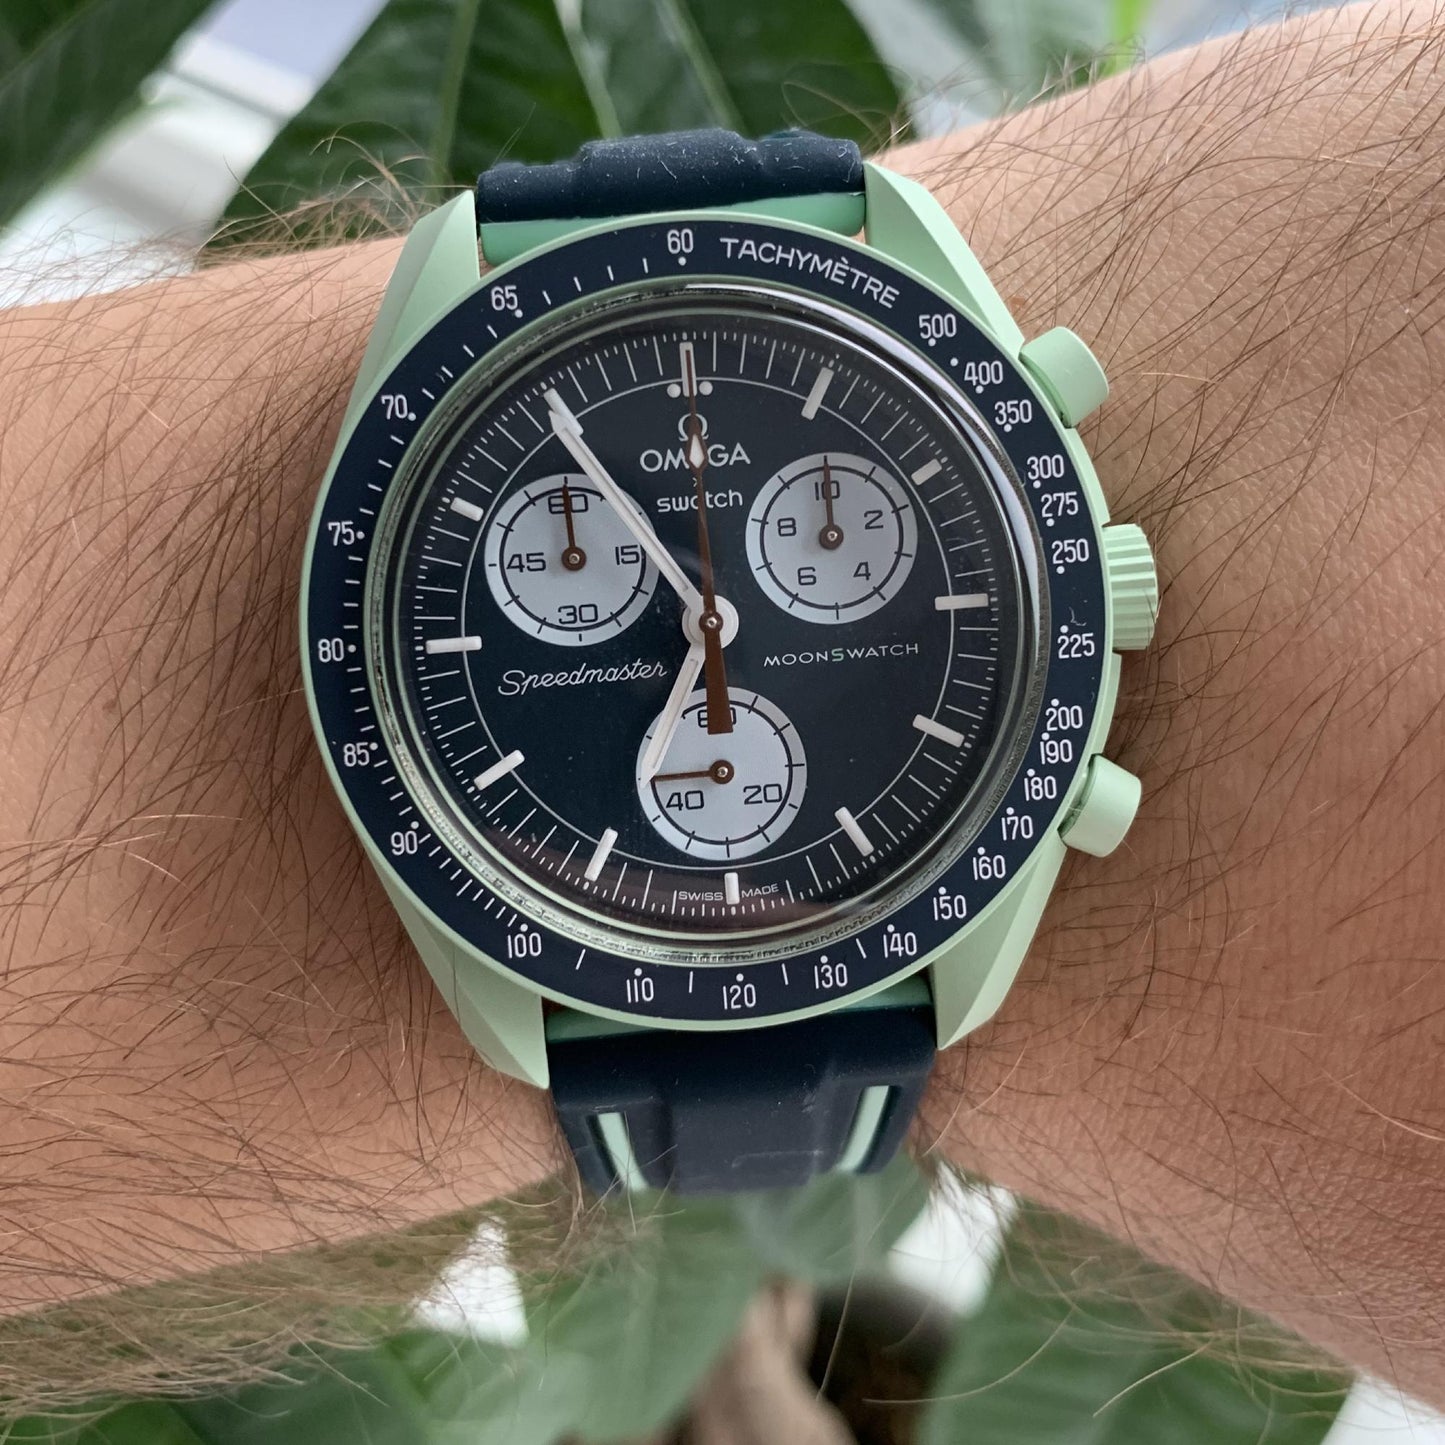 Armband strap Omega Swatch MoonSwatch blau silikon